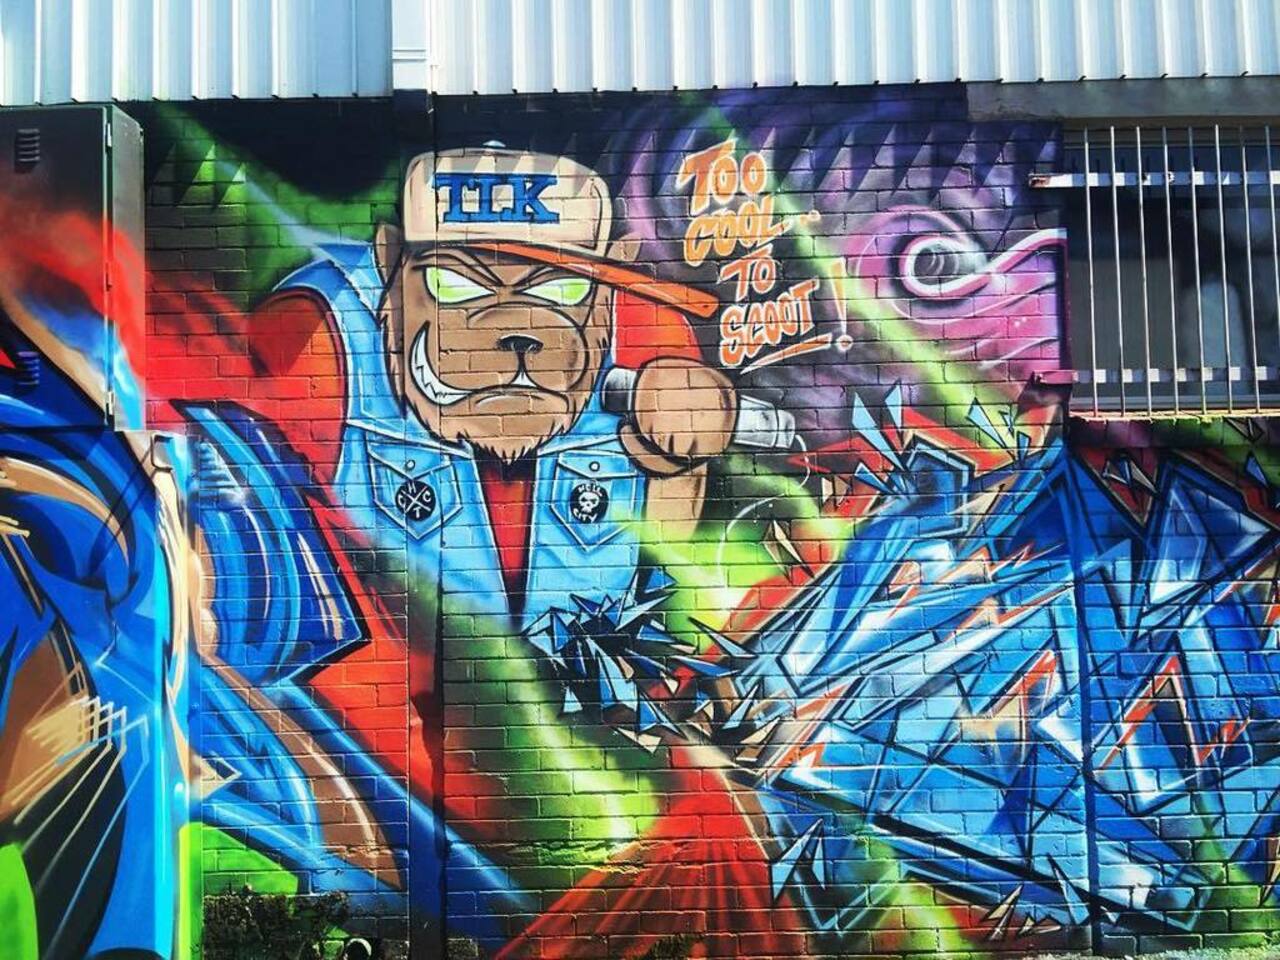 RT @artpushr: via #strangestories "http://bit.ly/1M8zIRc" #graffiti #streetart http://t.co/awfRK0up3K